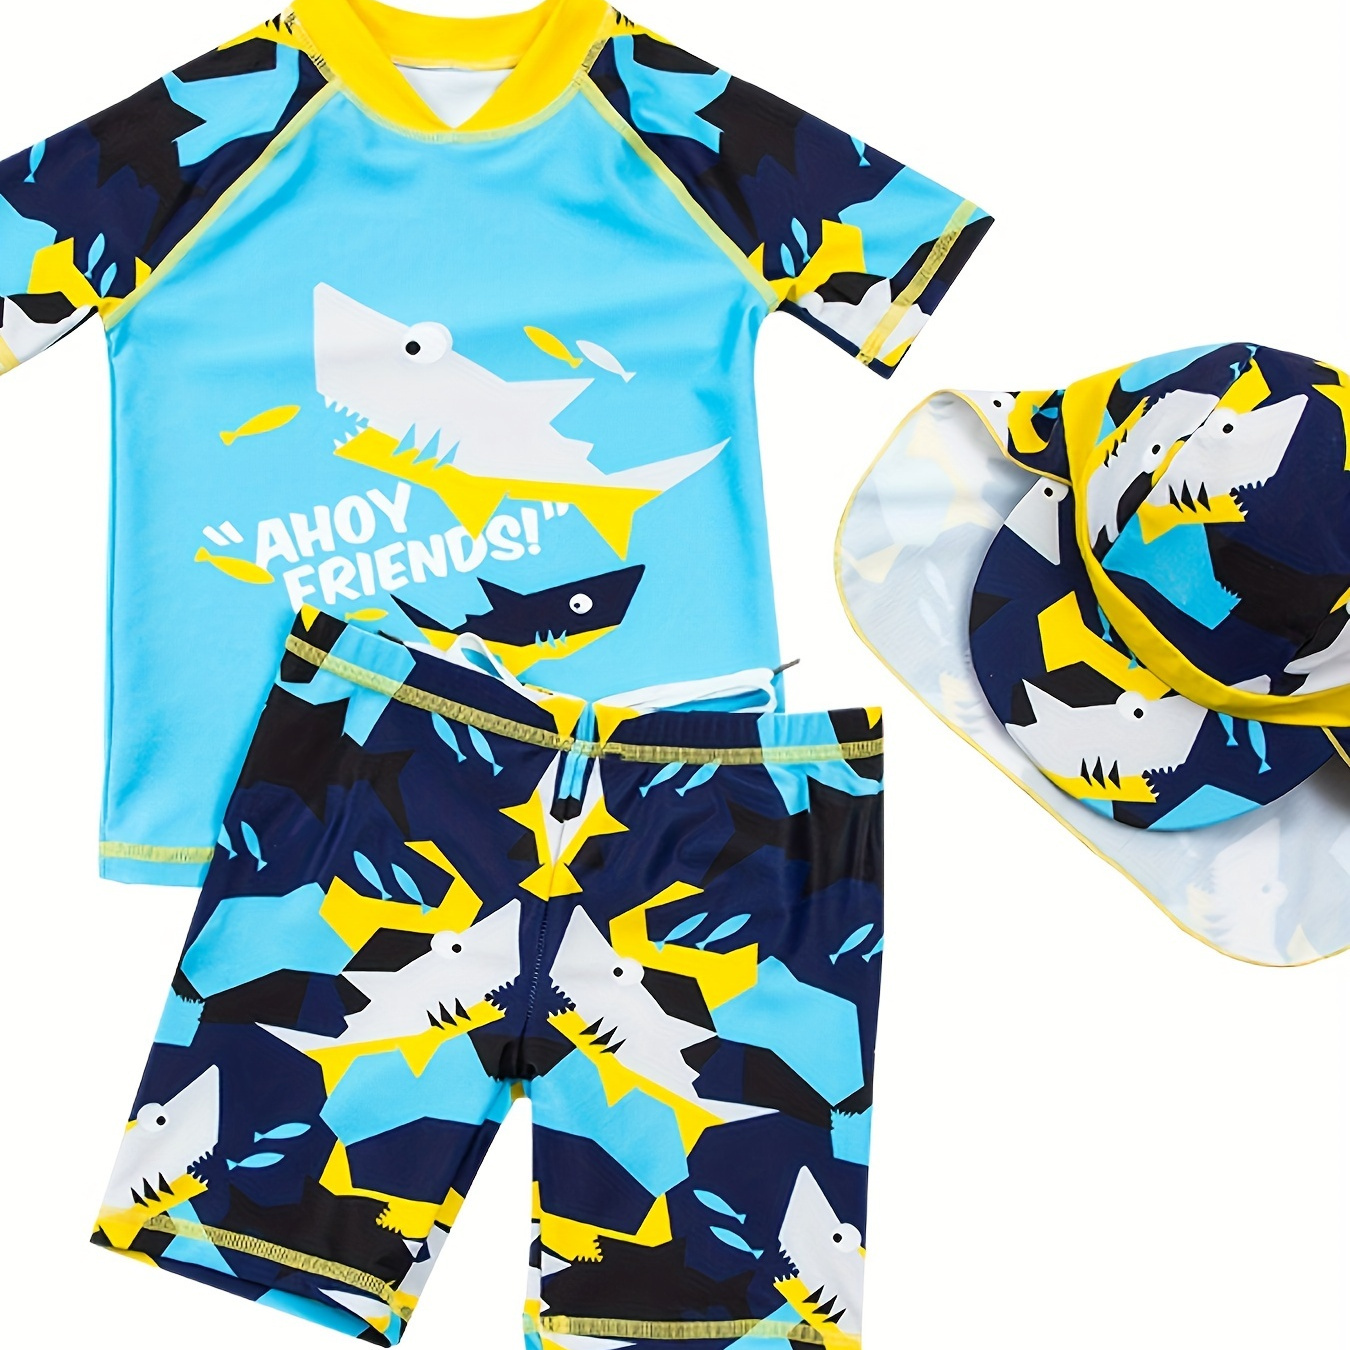 

2pcs Cartoon Shark Pattern Swimsuit For Boys, T-shirt & Swim Trunks & Hat Set, Stretchy Surfing Suit, Kid's Swimwear For Summer Beach Vacation